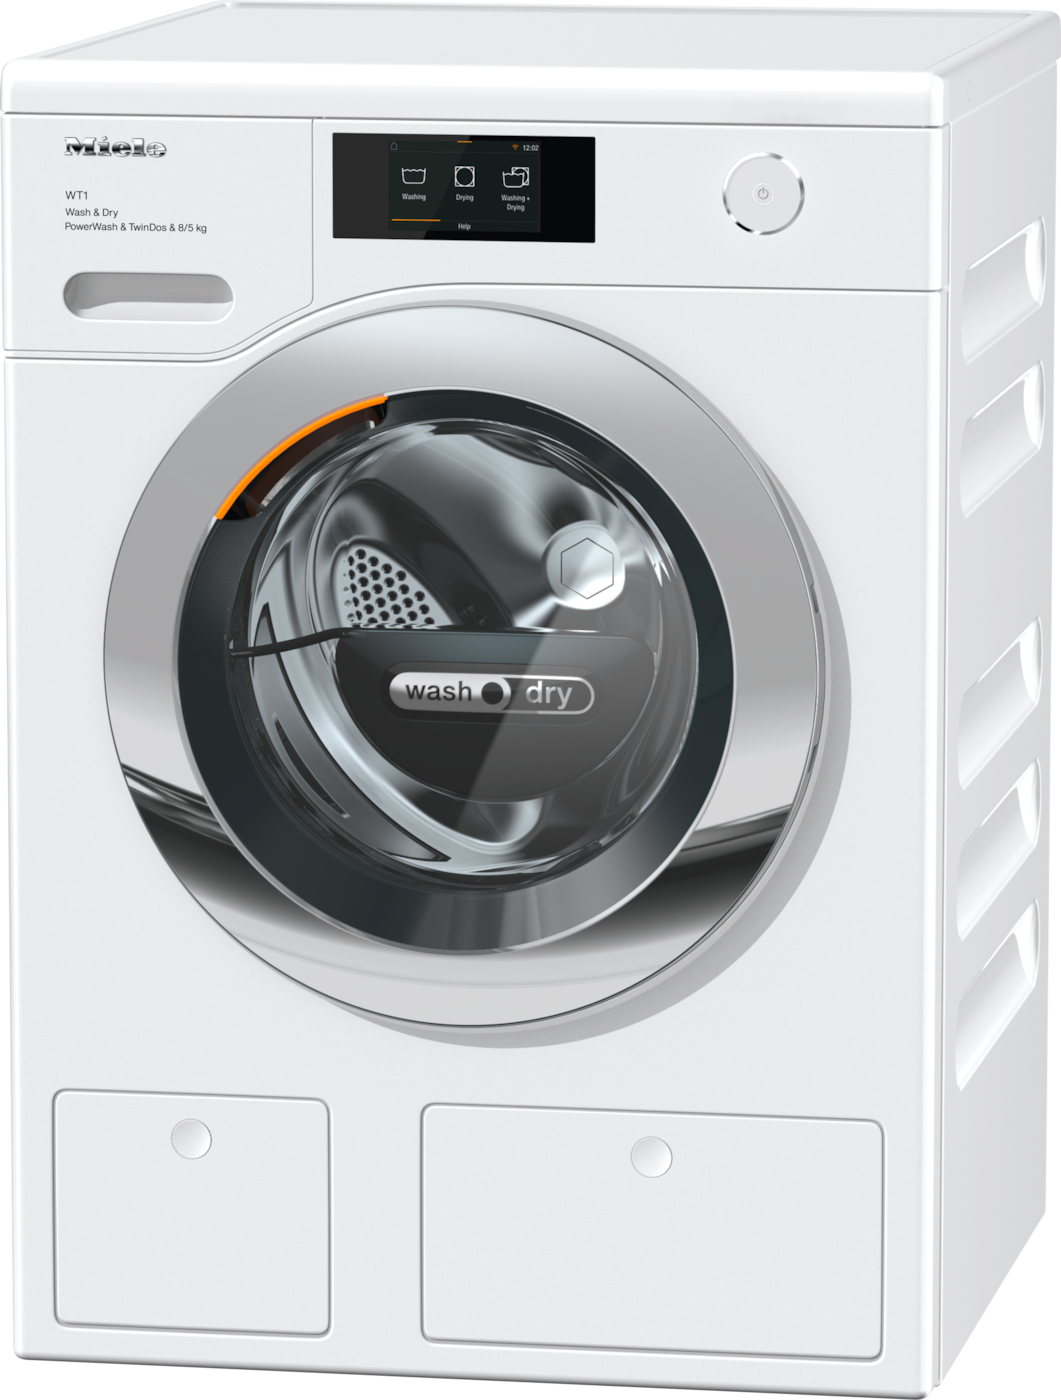 WTR860WPM PWash&TDos 8/5kg - WT1 洗衣乾衣機： 